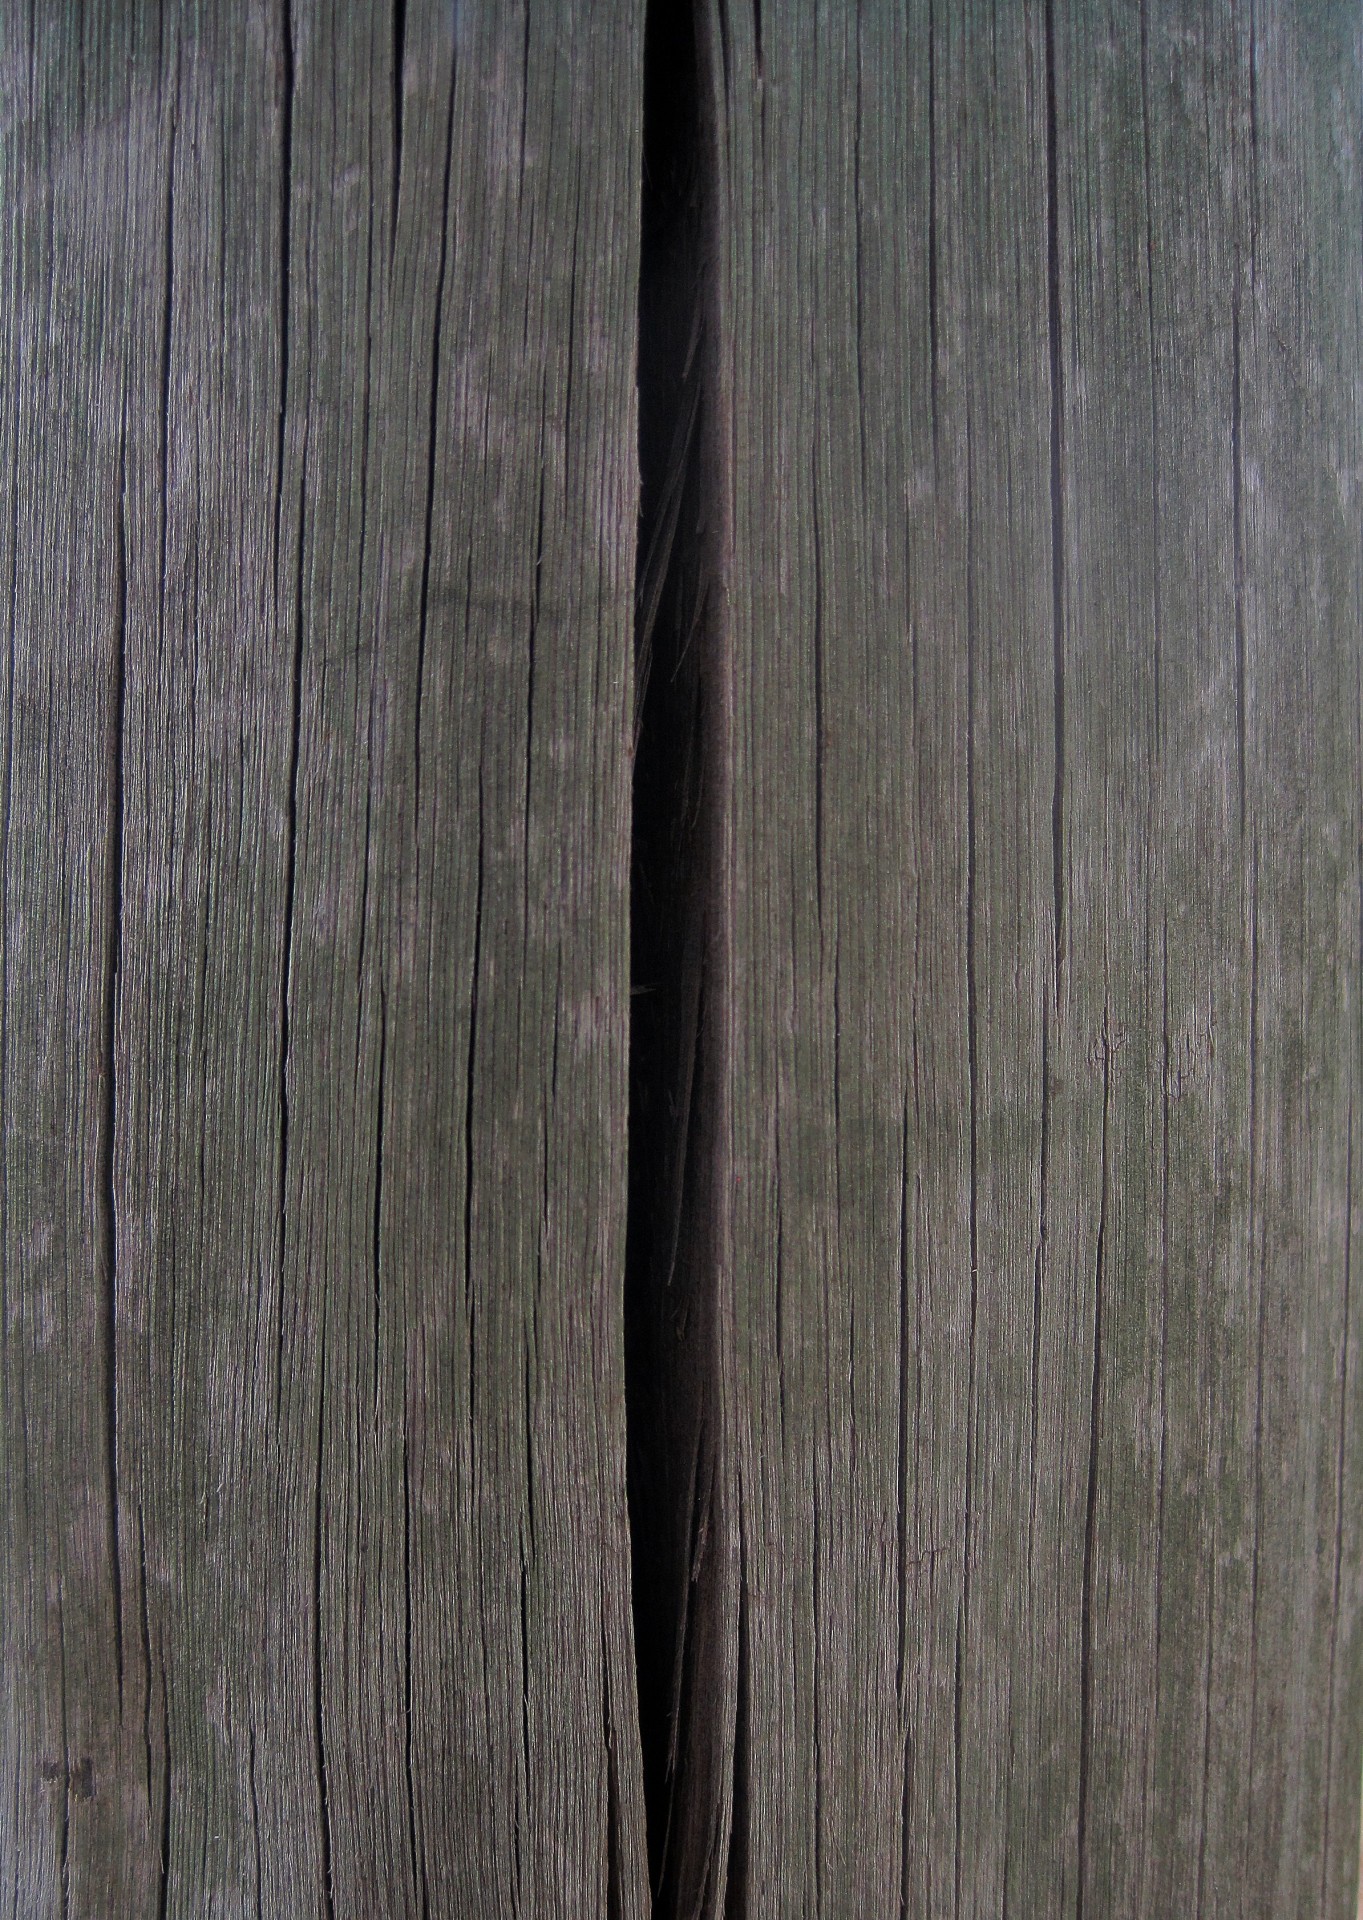 pole wood old free photo